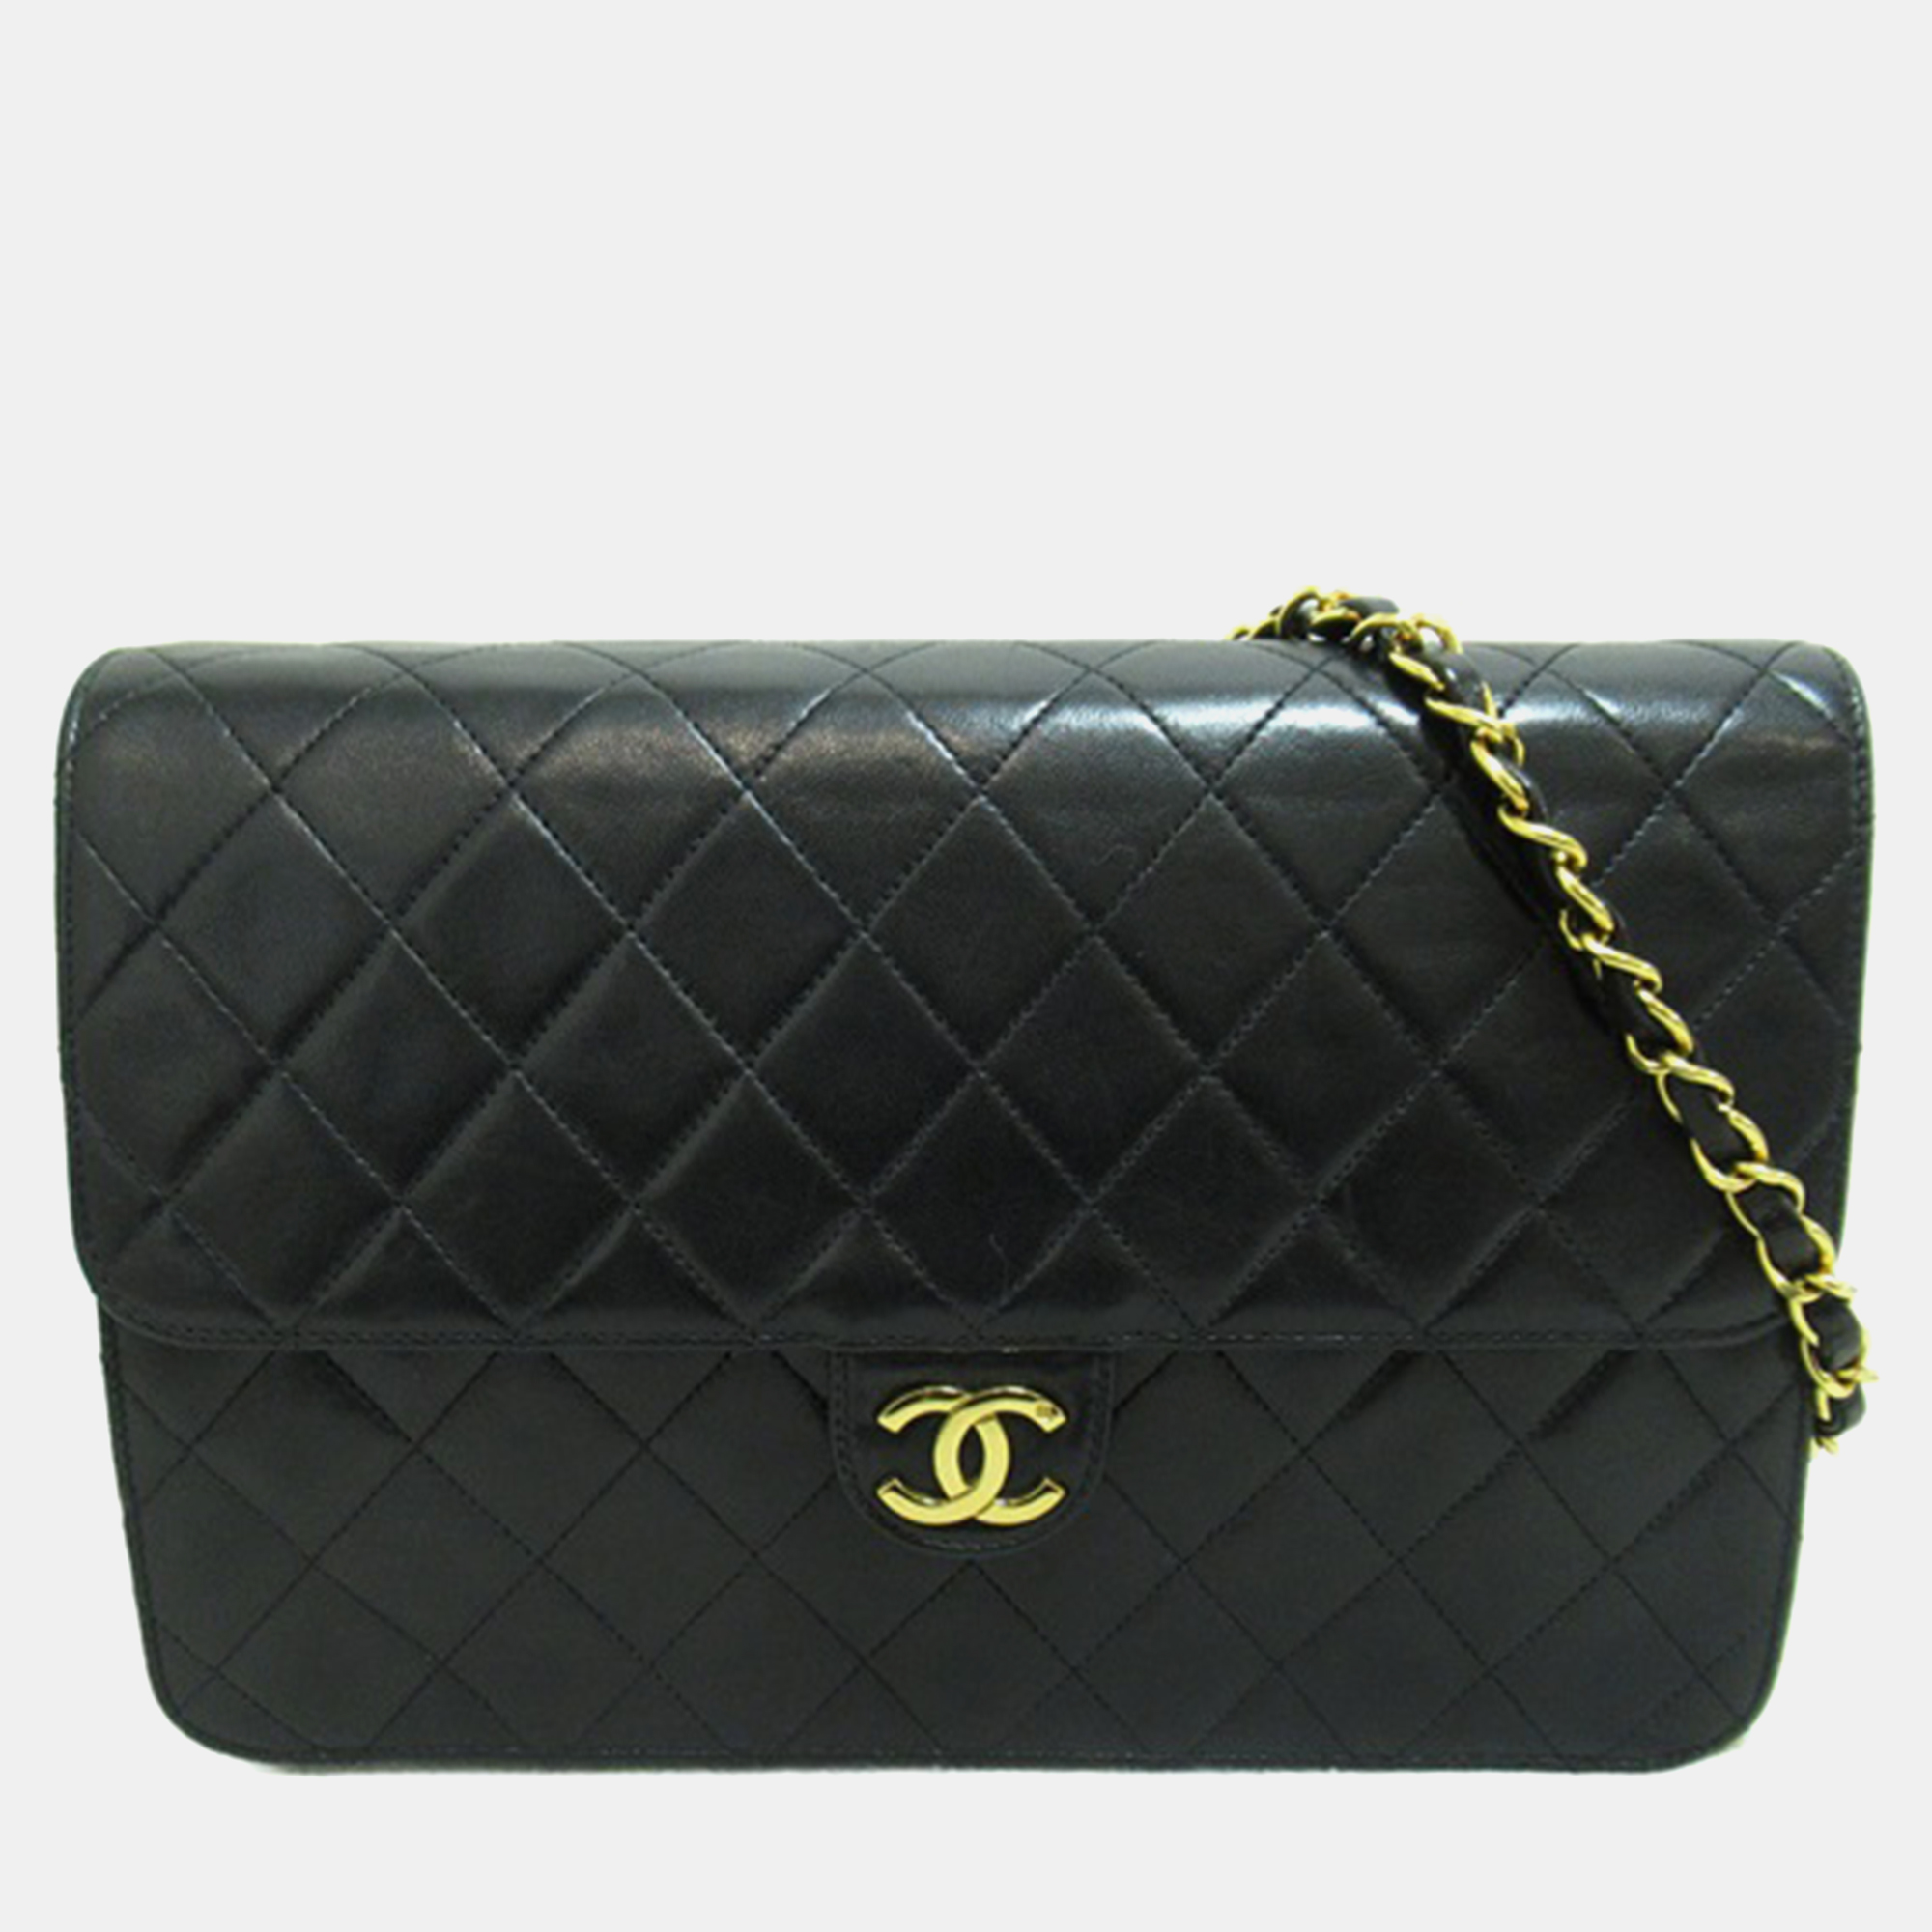 Chanel black leather  medium classic single flap bag